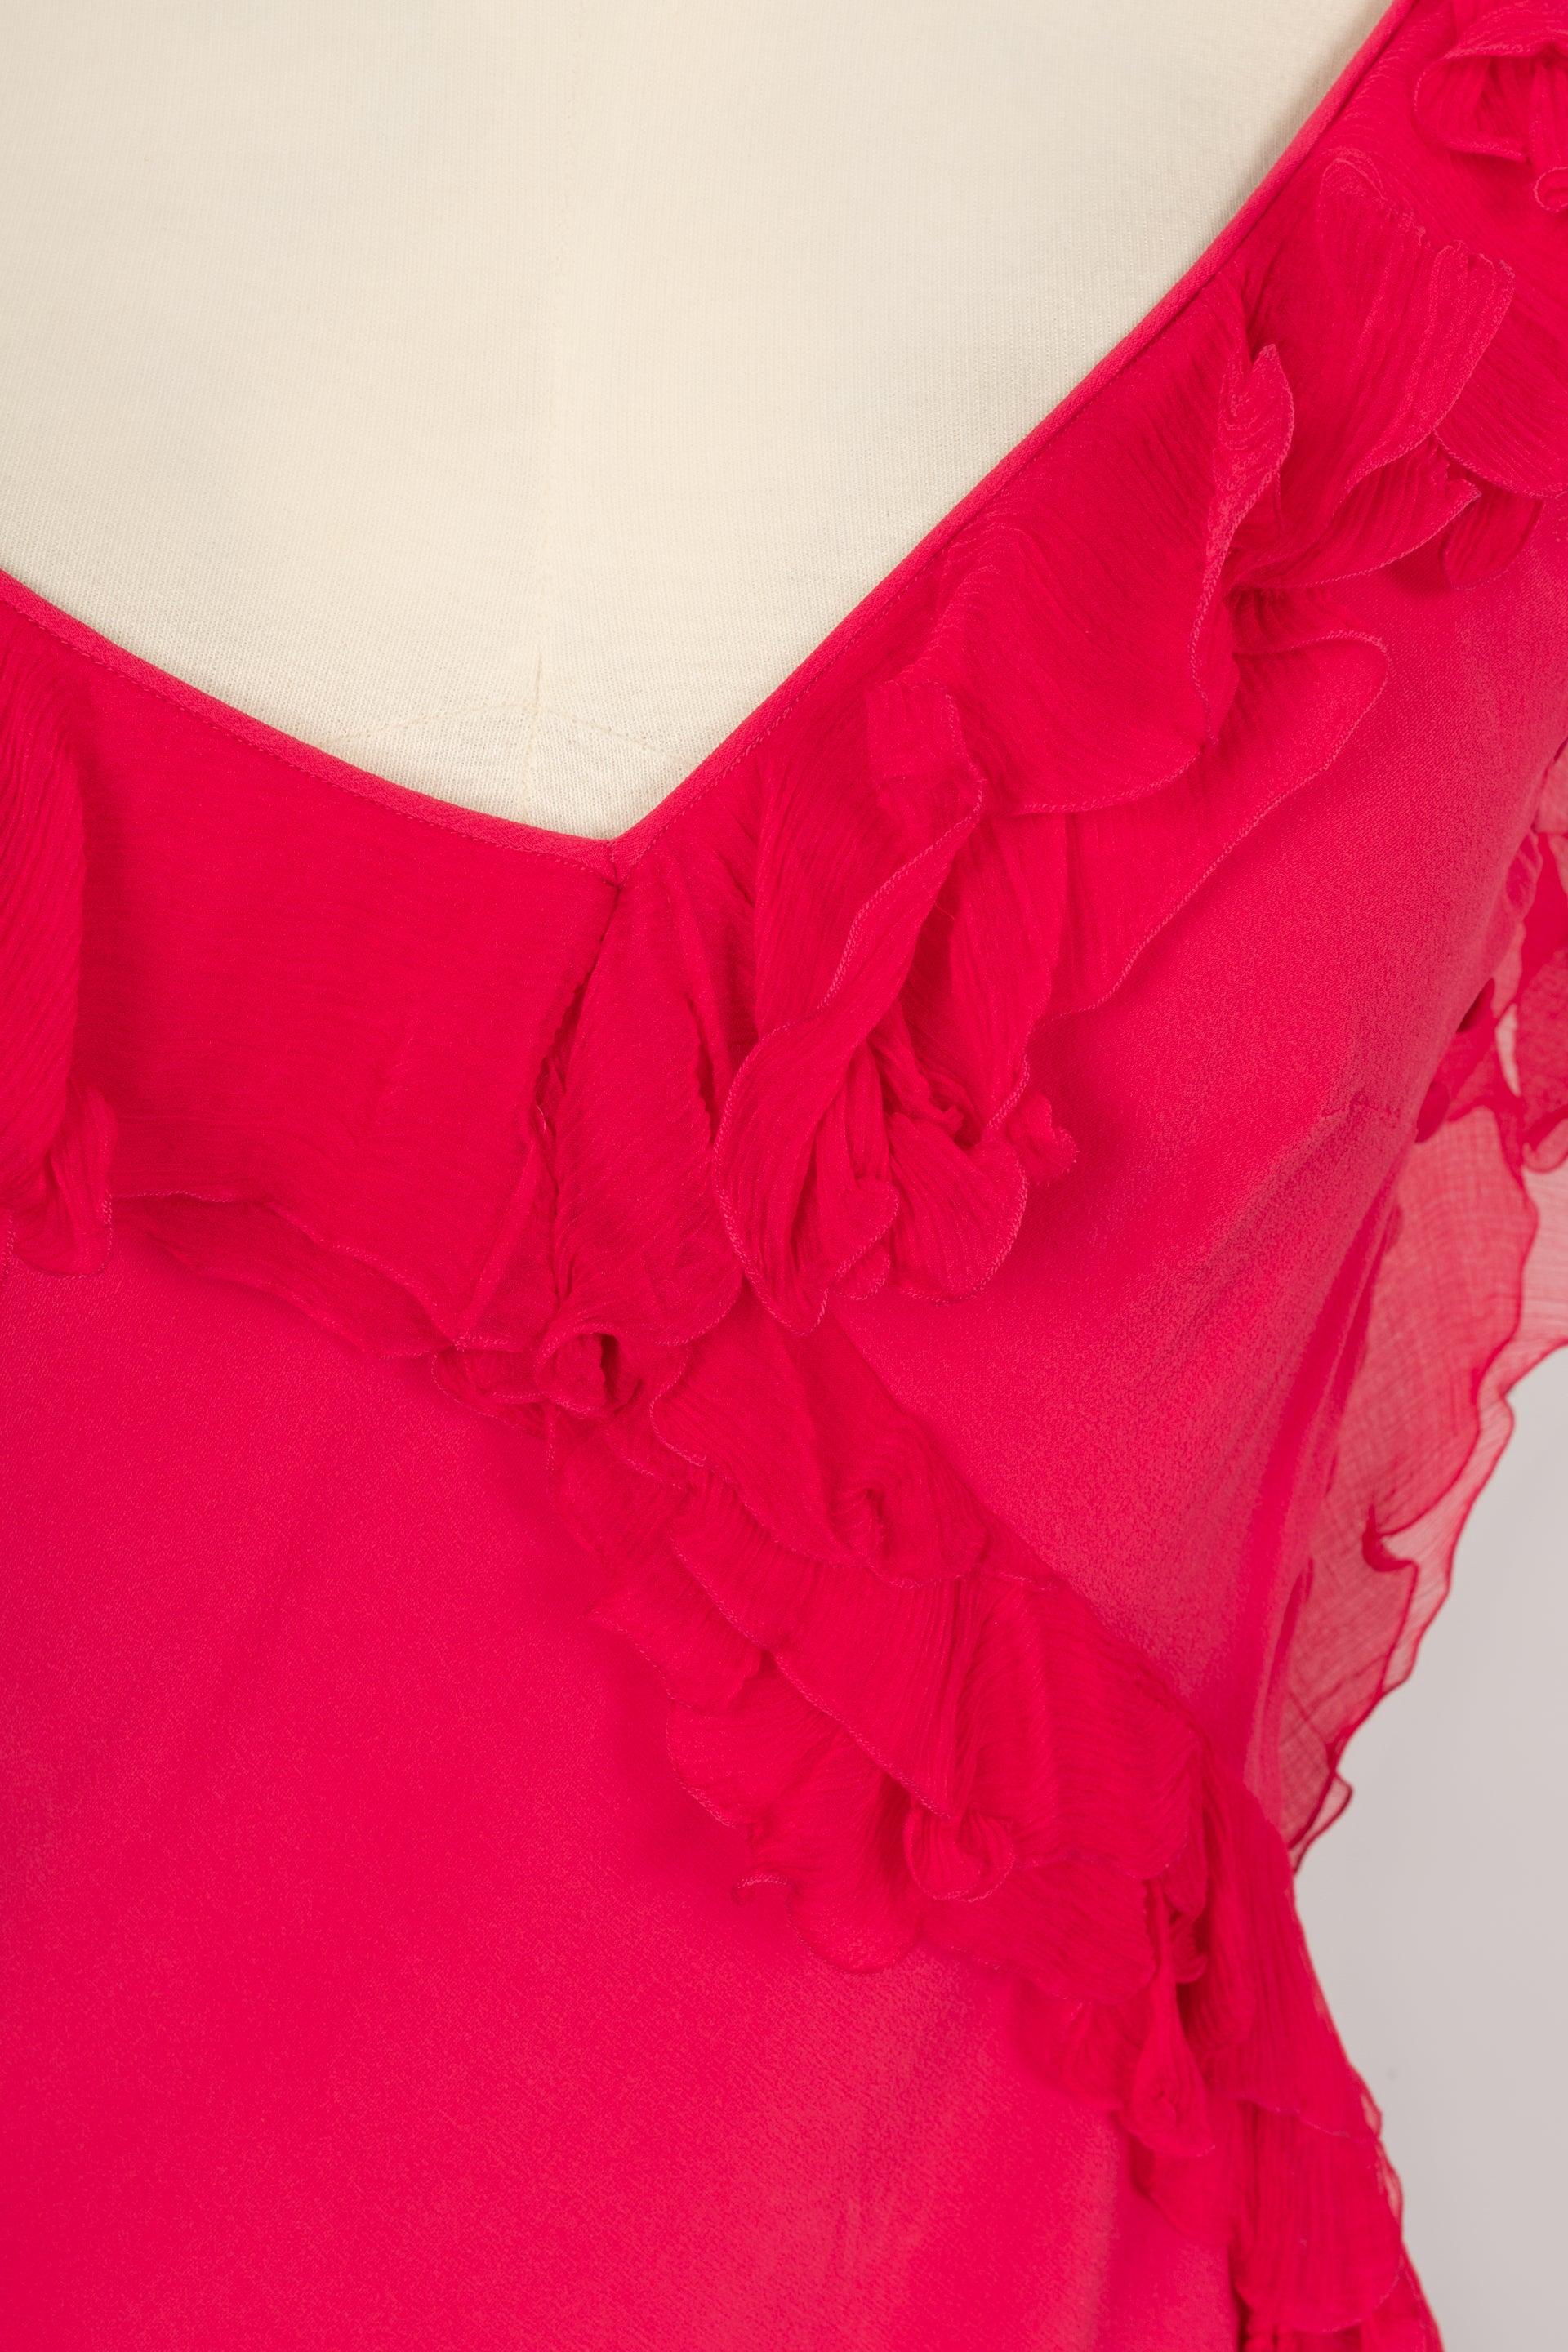 Galliano Silk Muslin and Silk Long Dress in Pink Tones 1